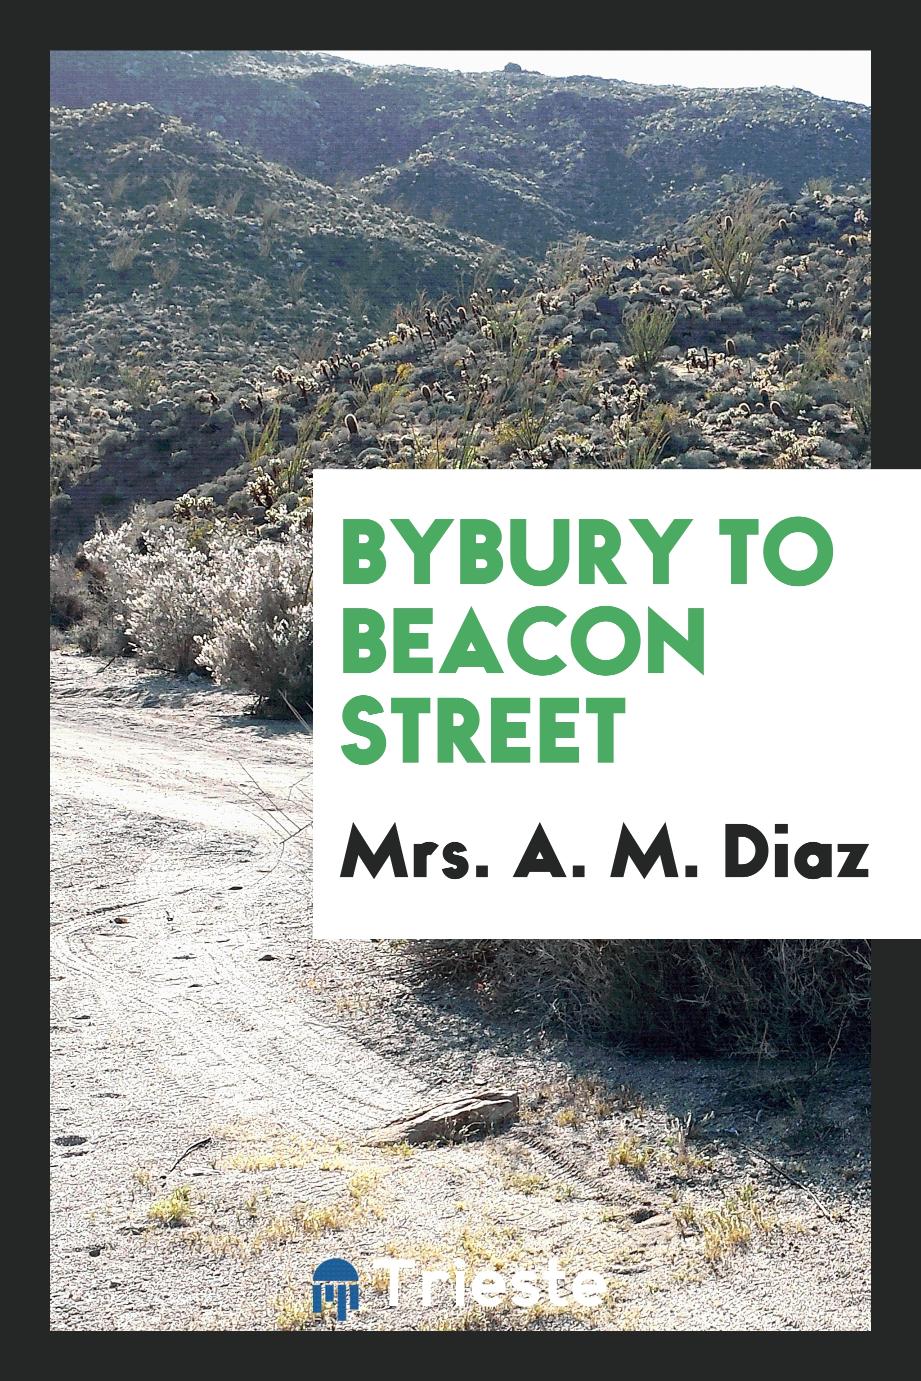 Bybury to Beacon street